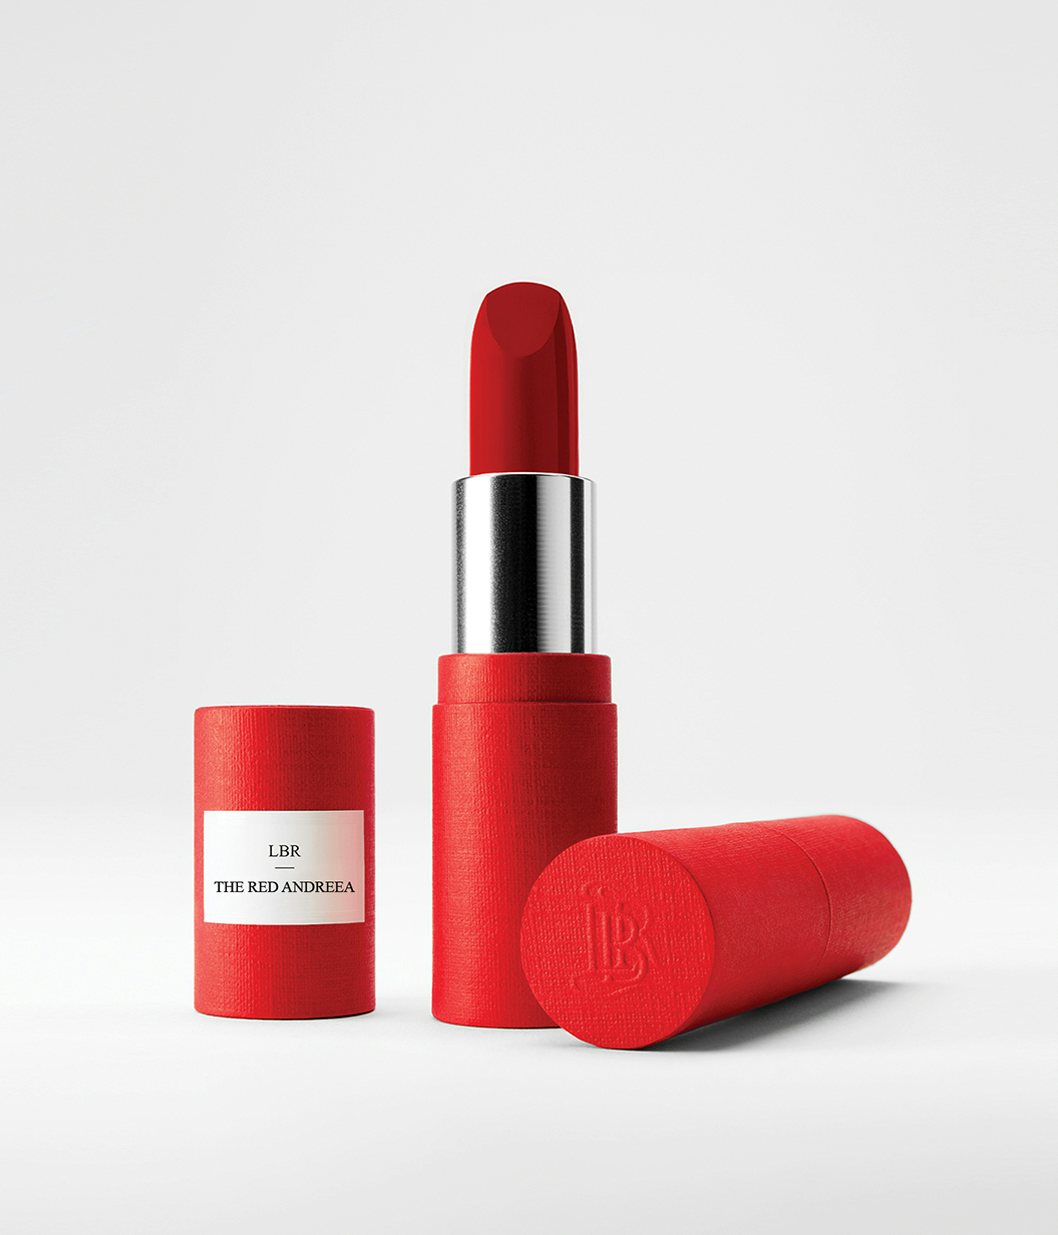 La bouche rouge The Andreea lipstick in the red paper case